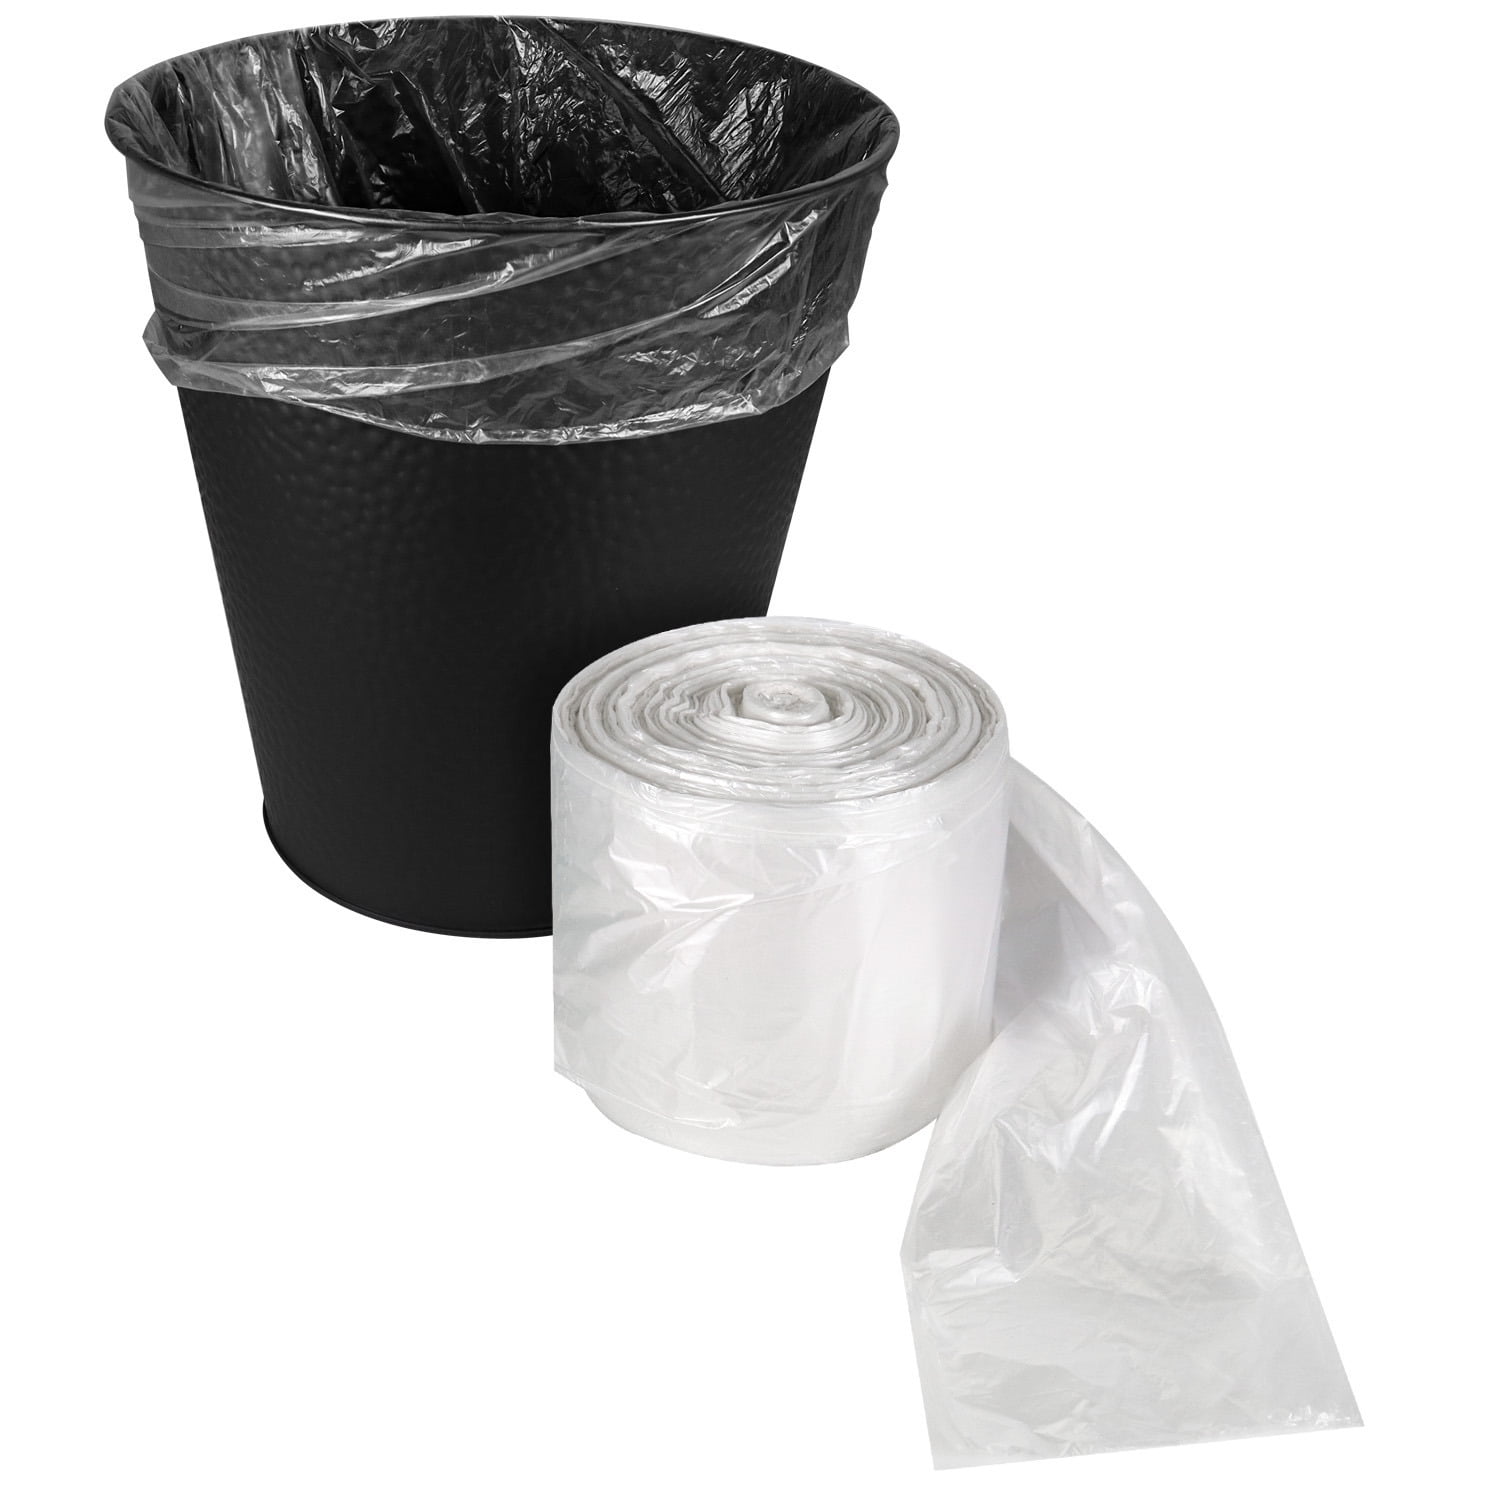 BEIDOU-PAC 2-4 Gallon Trash Bags, 1000 Count Bulk Value Pack